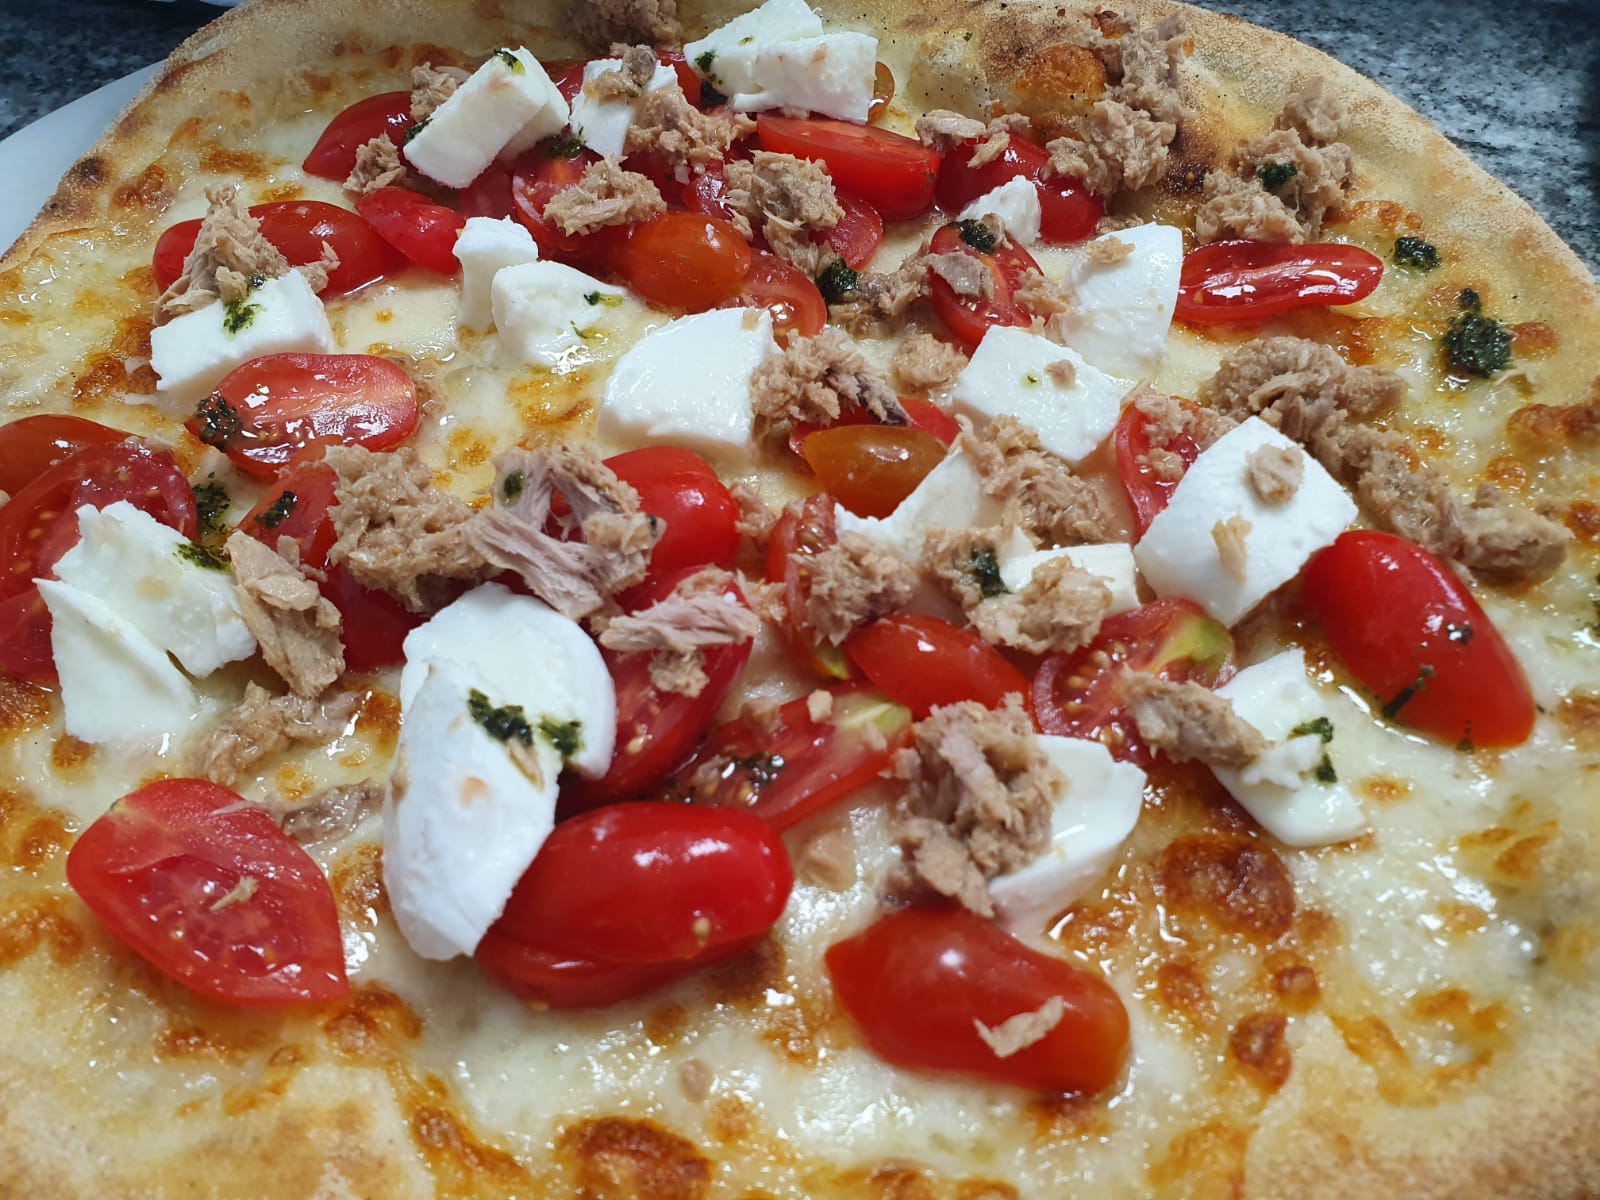 Benvenuti al Pizzorante - pizzeria, pasta fresca e cucina piemontese